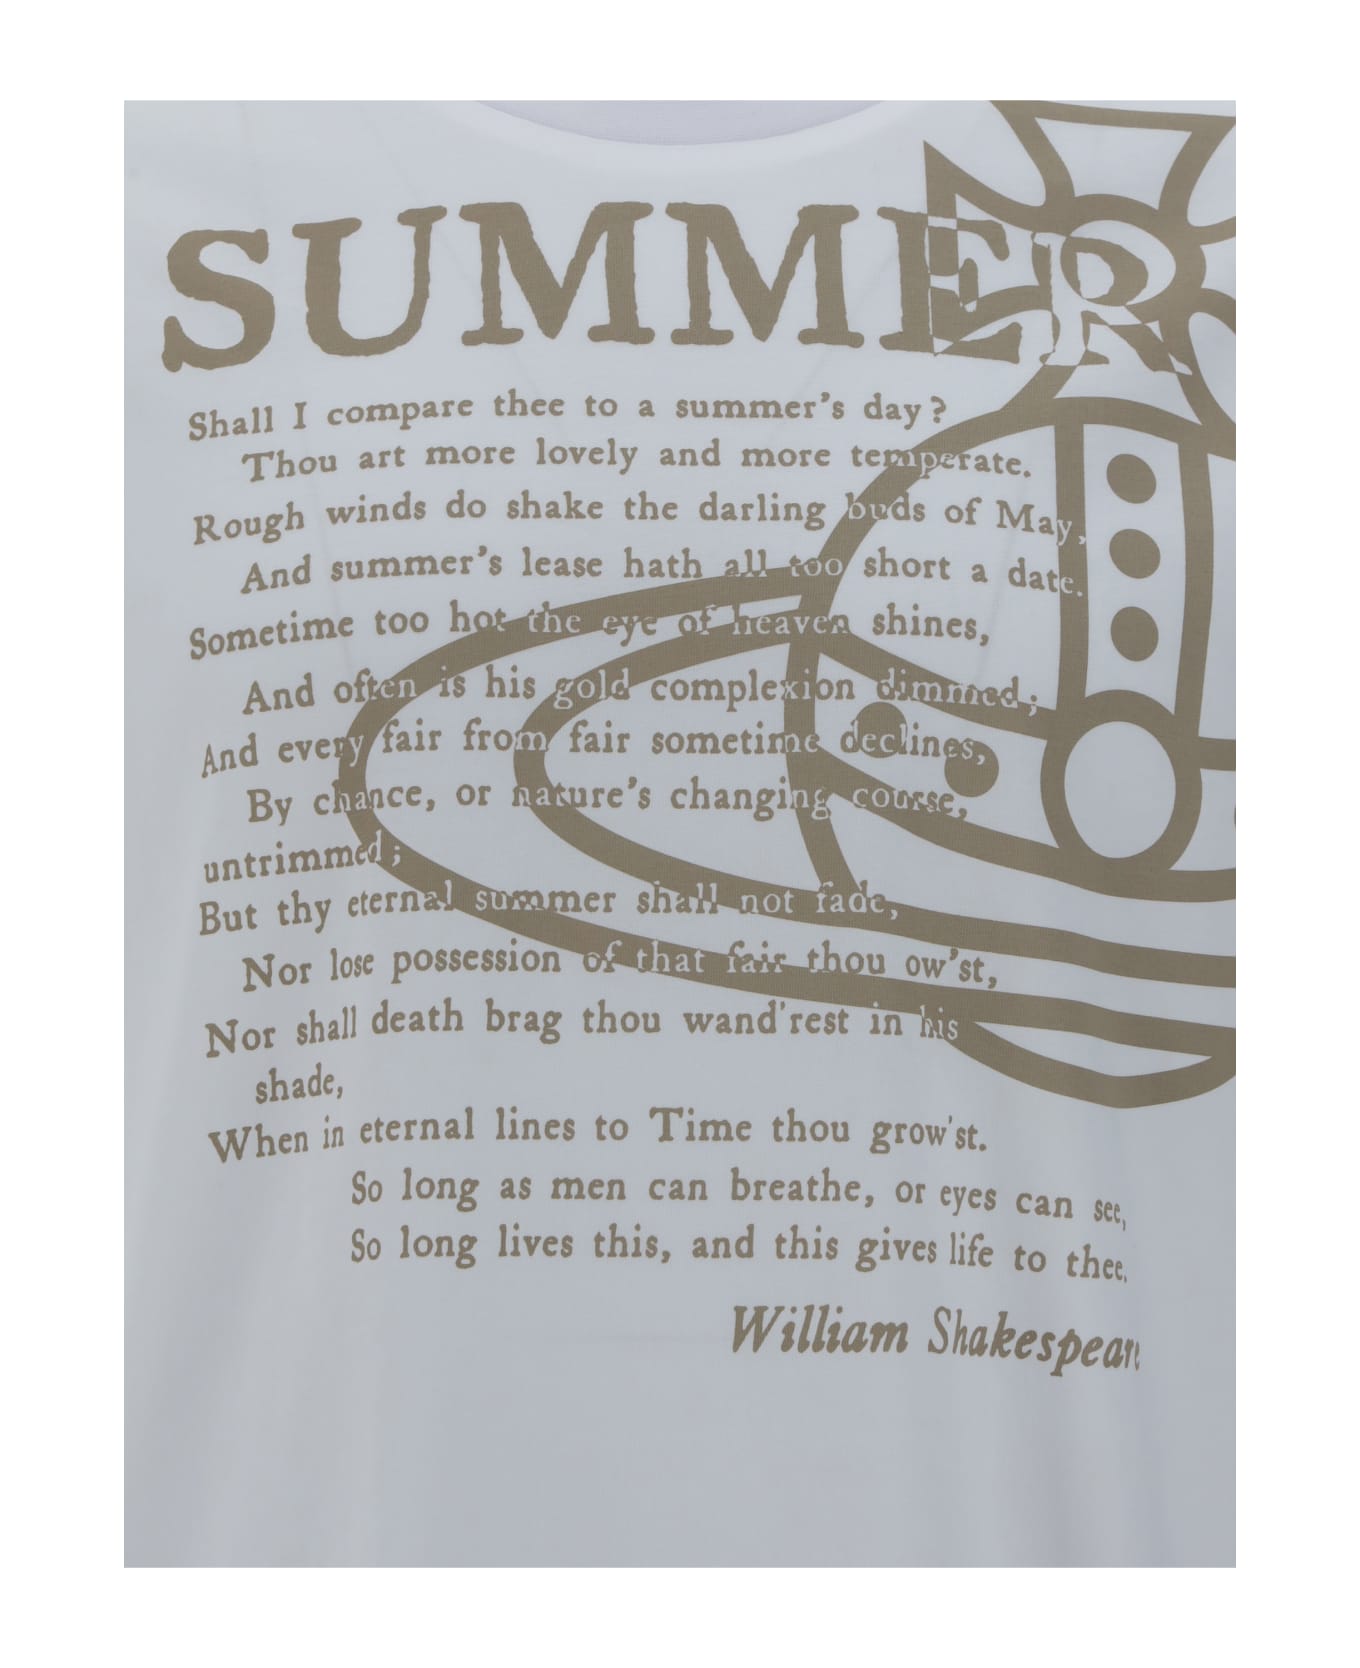 Vivienne Westwood Summer T-shirt - Bianco